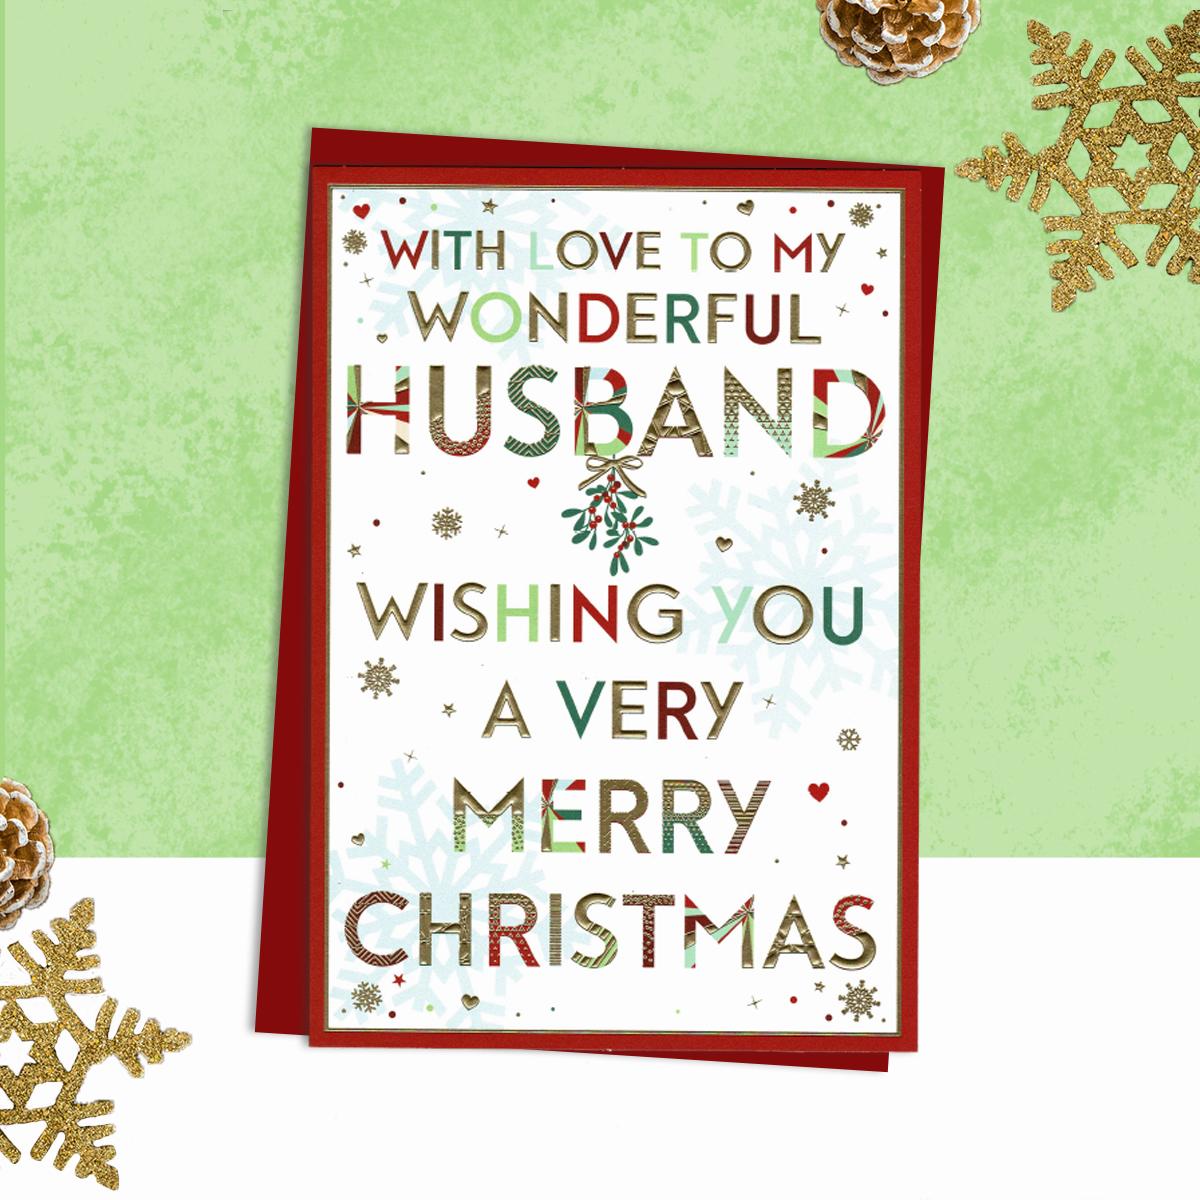 Wonderful Husband Christmas Card Alongside Its Red Envelope